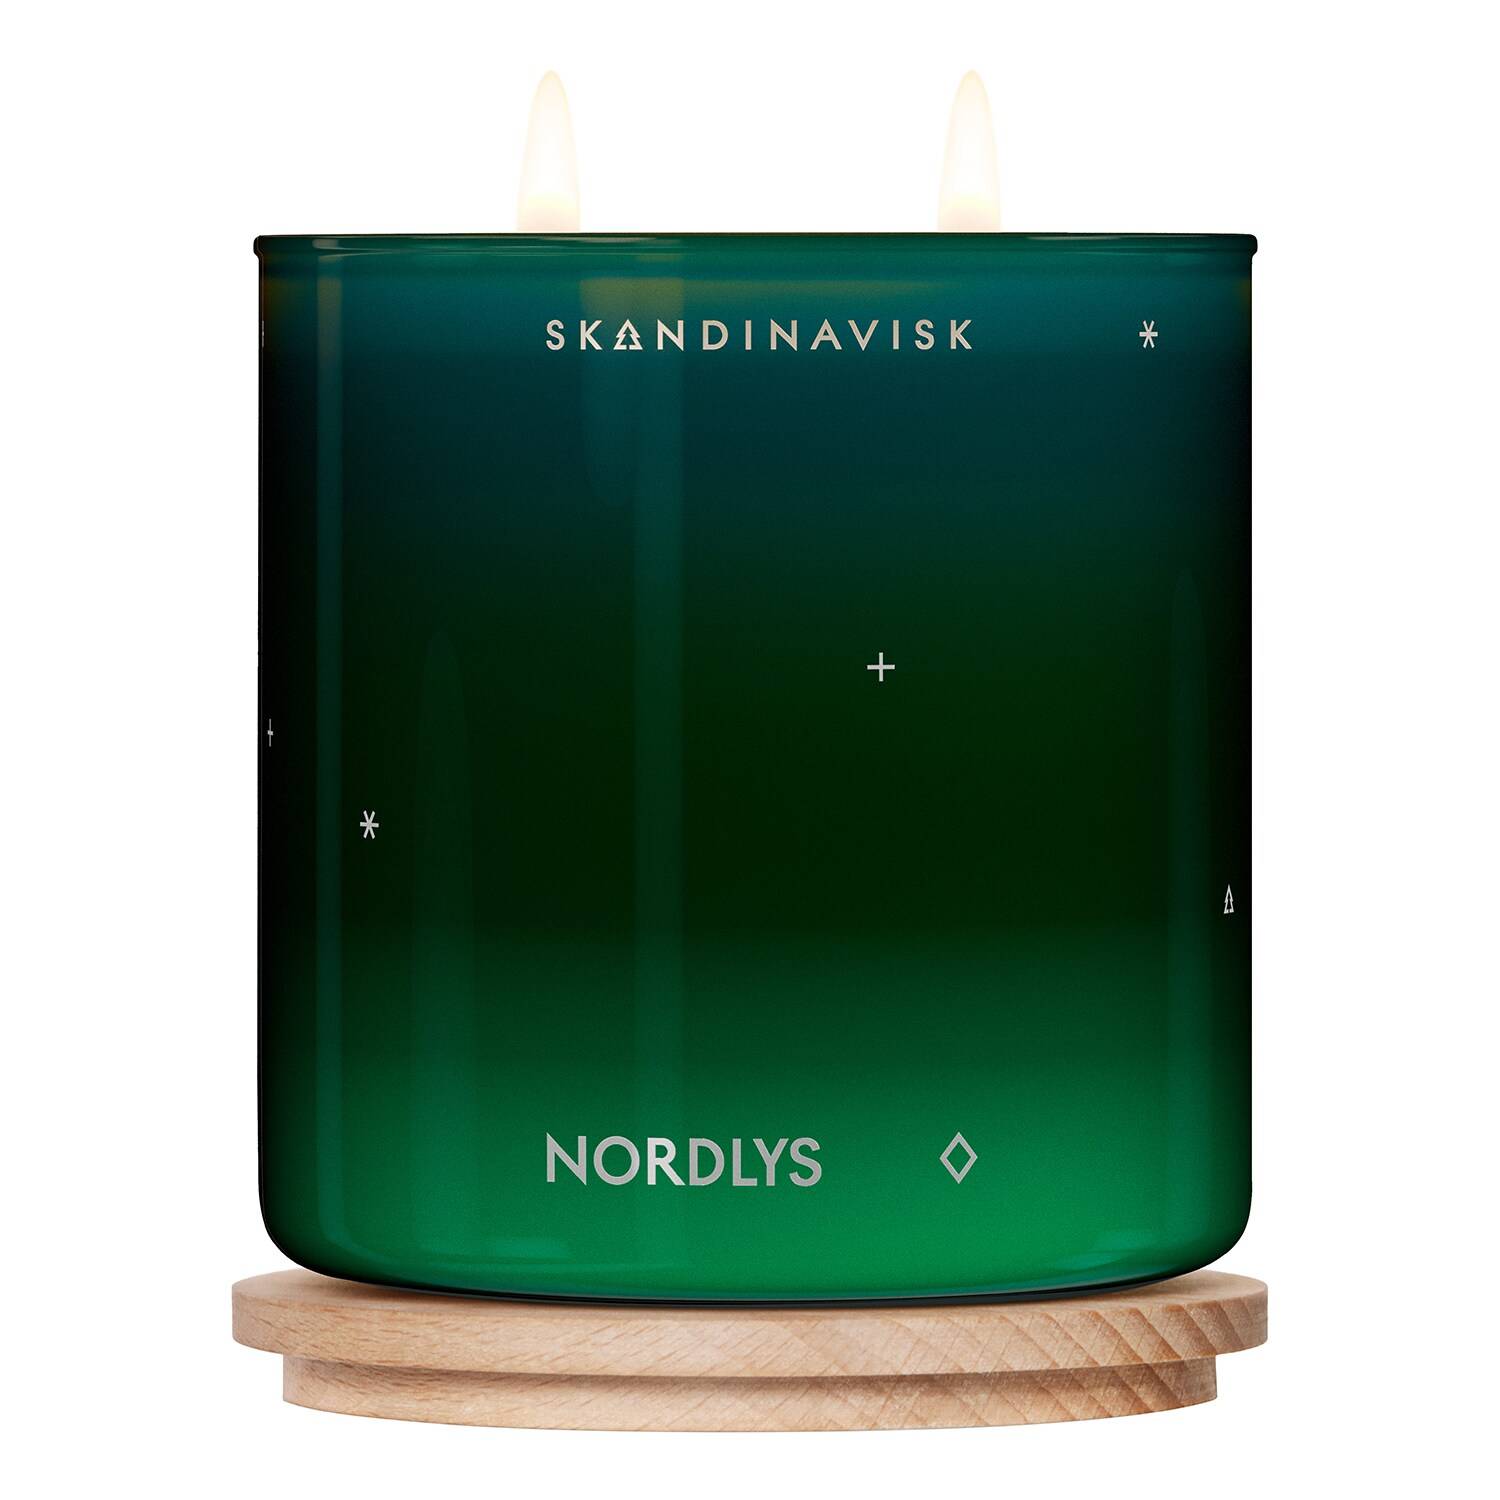 Skandinavisk Nordlys Scented Candle 400G